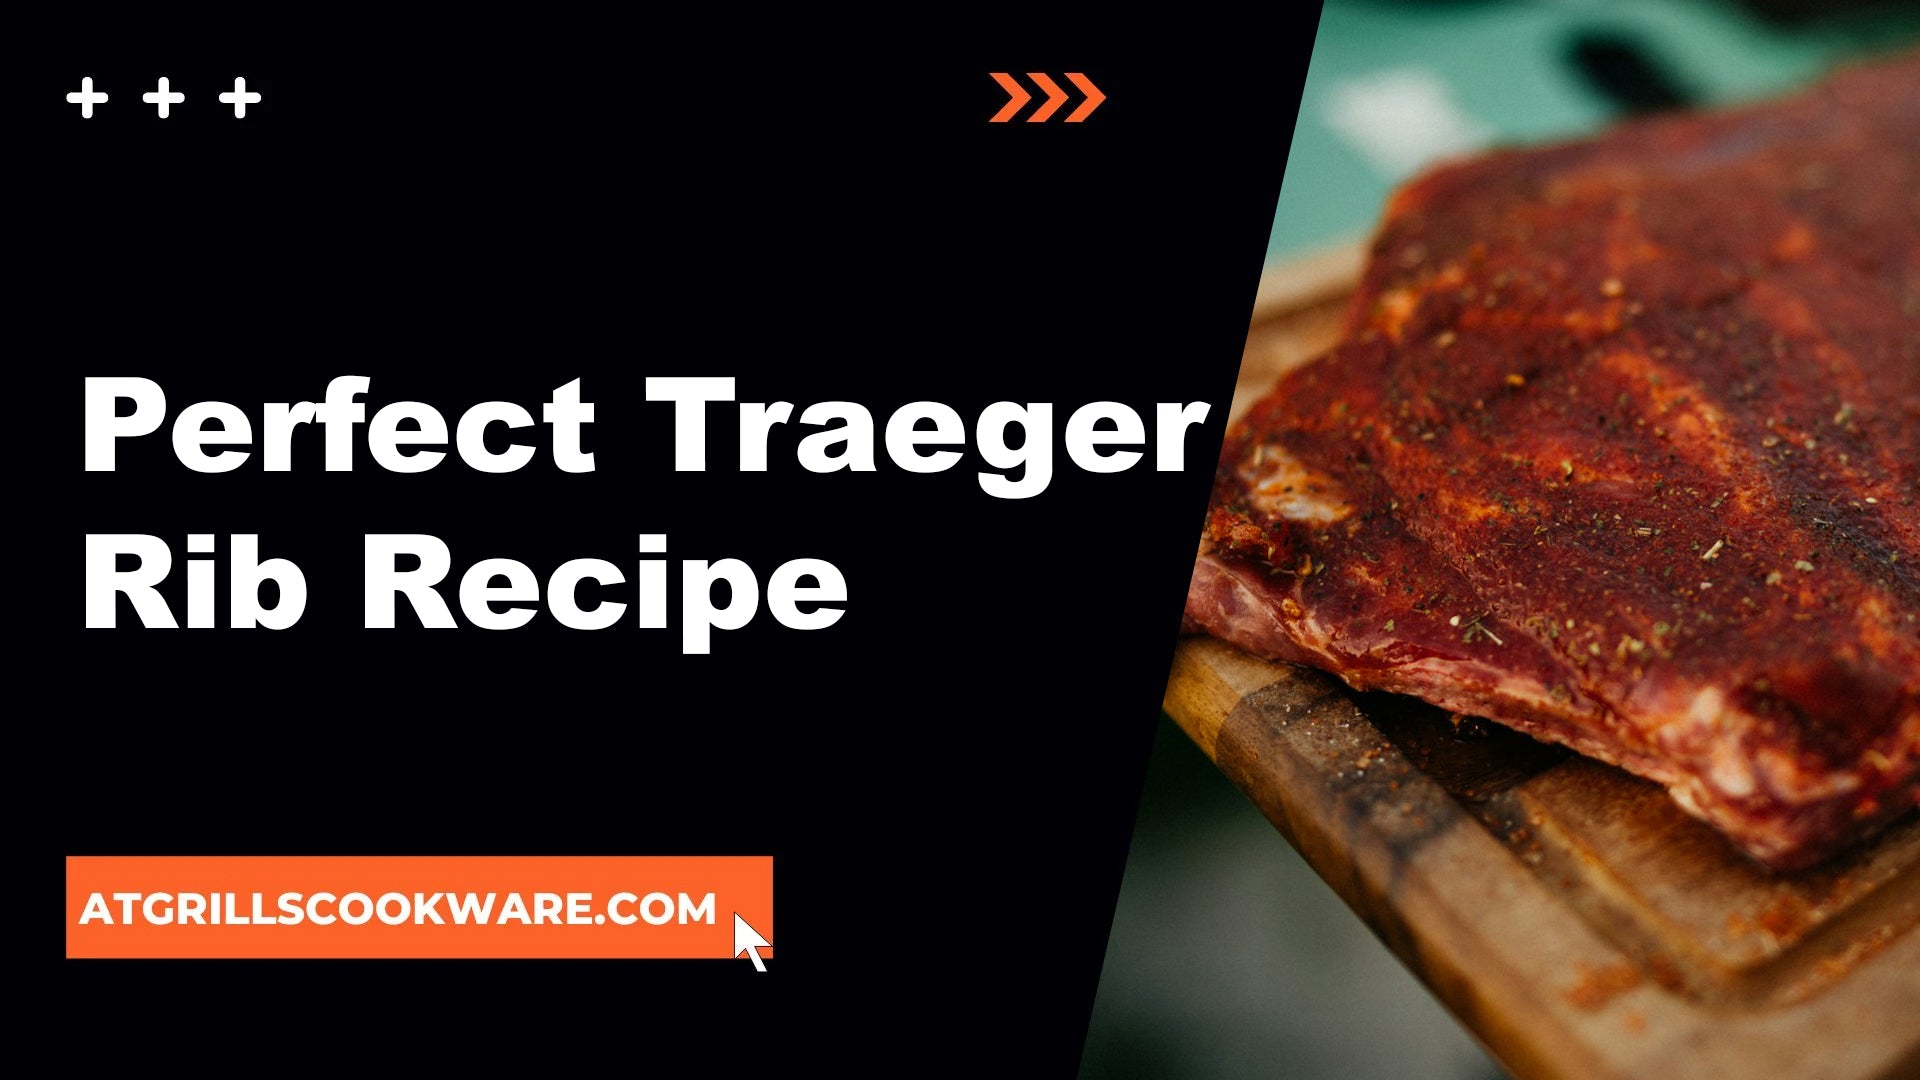 Traeger Rib Recipe for Fall-Off-The-Bone Perfection